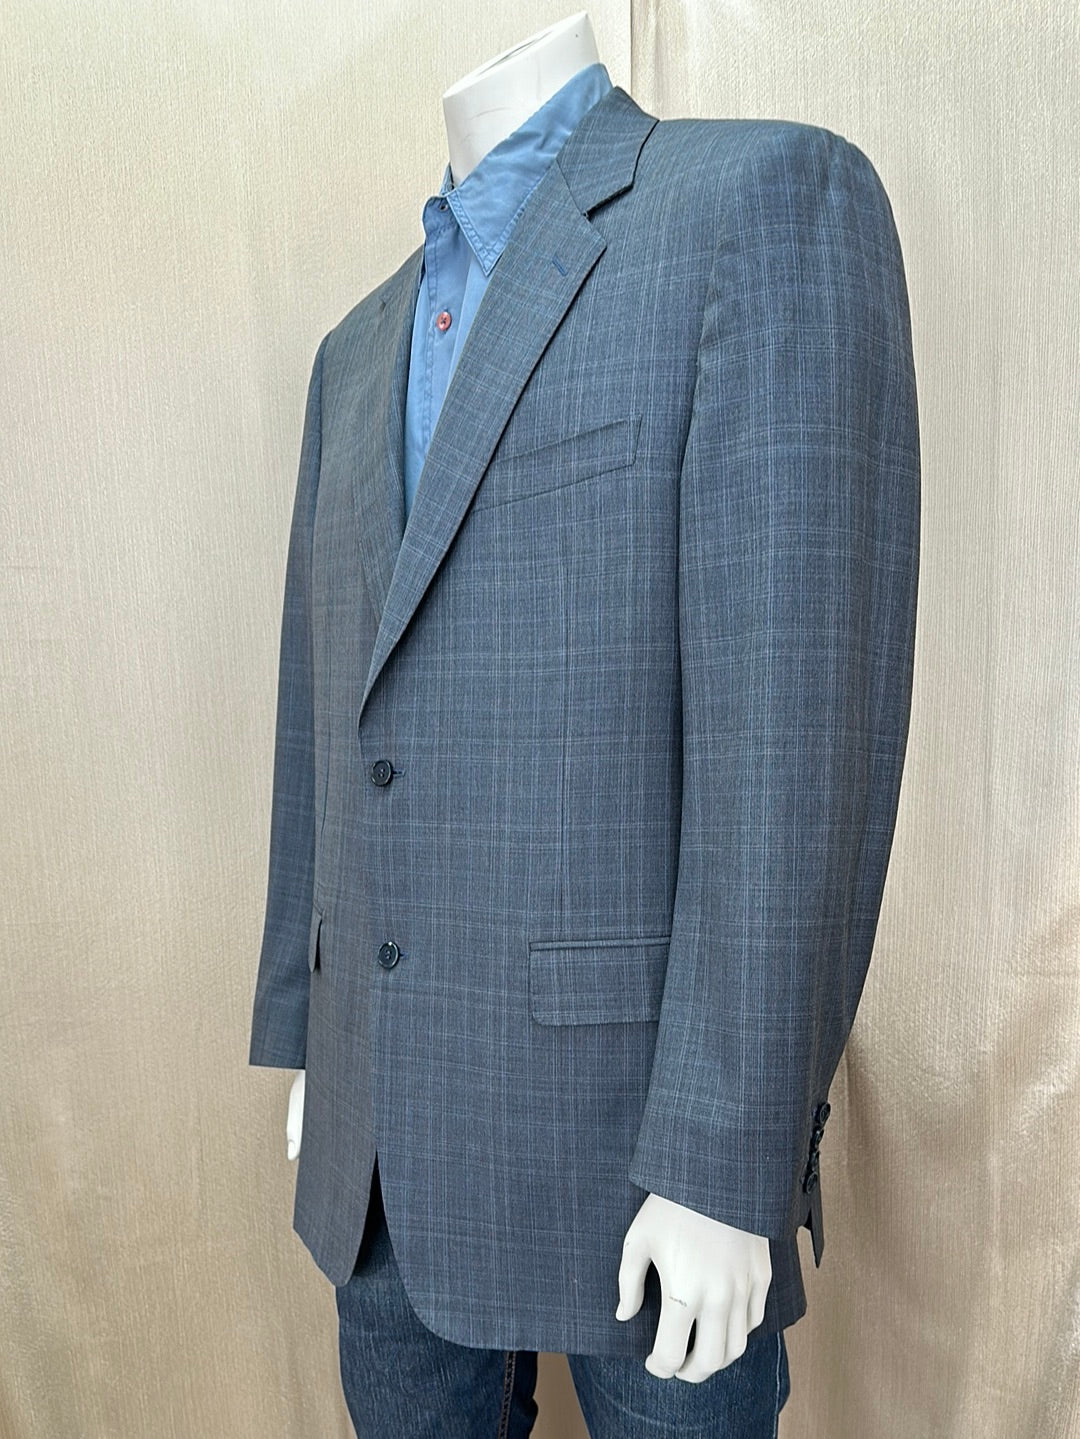 CANALI blue grey Pure Wool Plaid 2 Button Sport Coat Blazer - 54 / US 44L